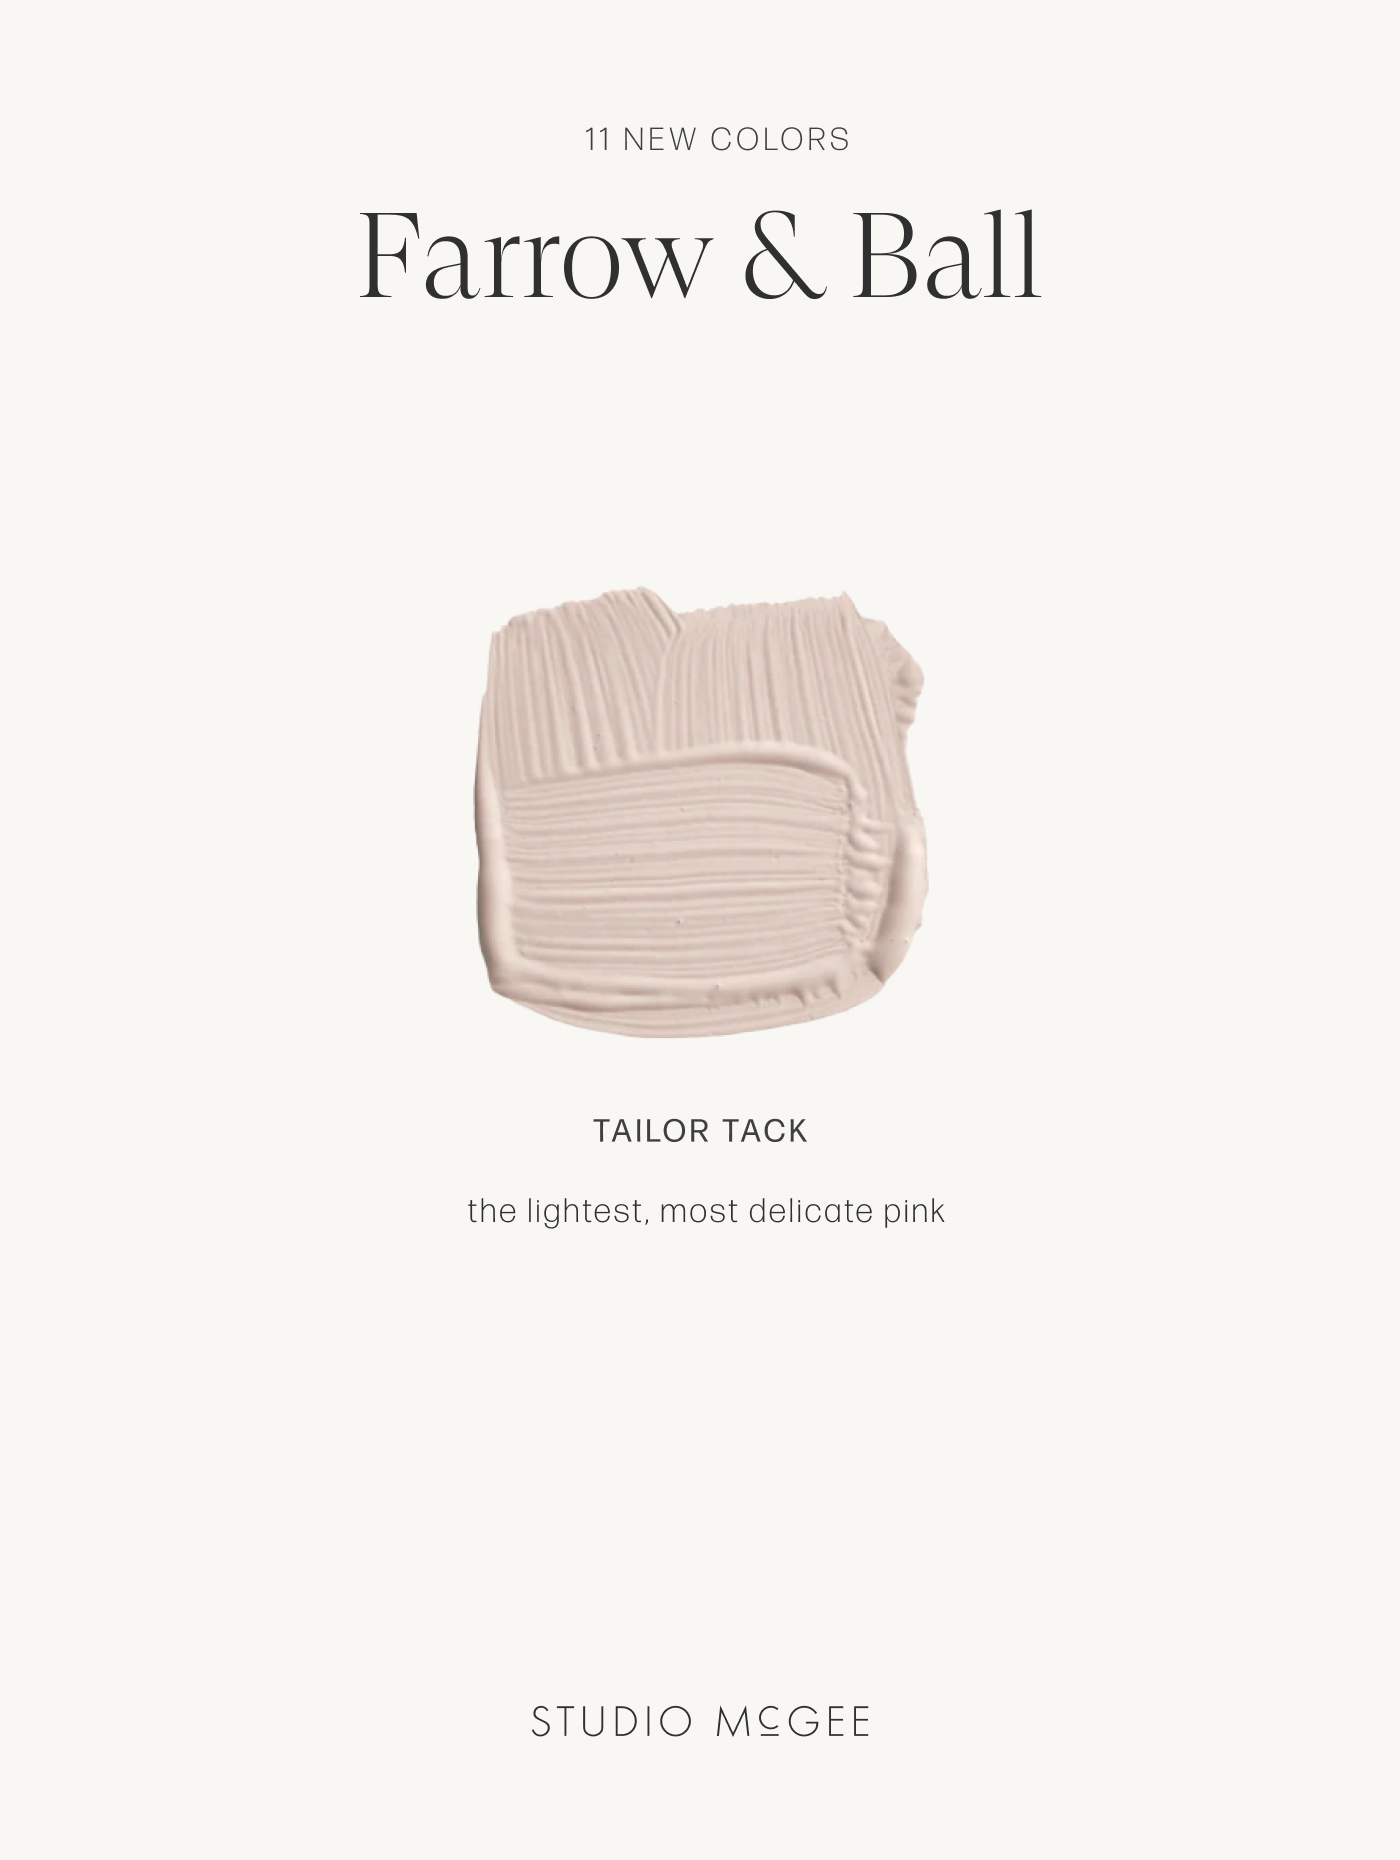 Farrow & Ball tailor tack